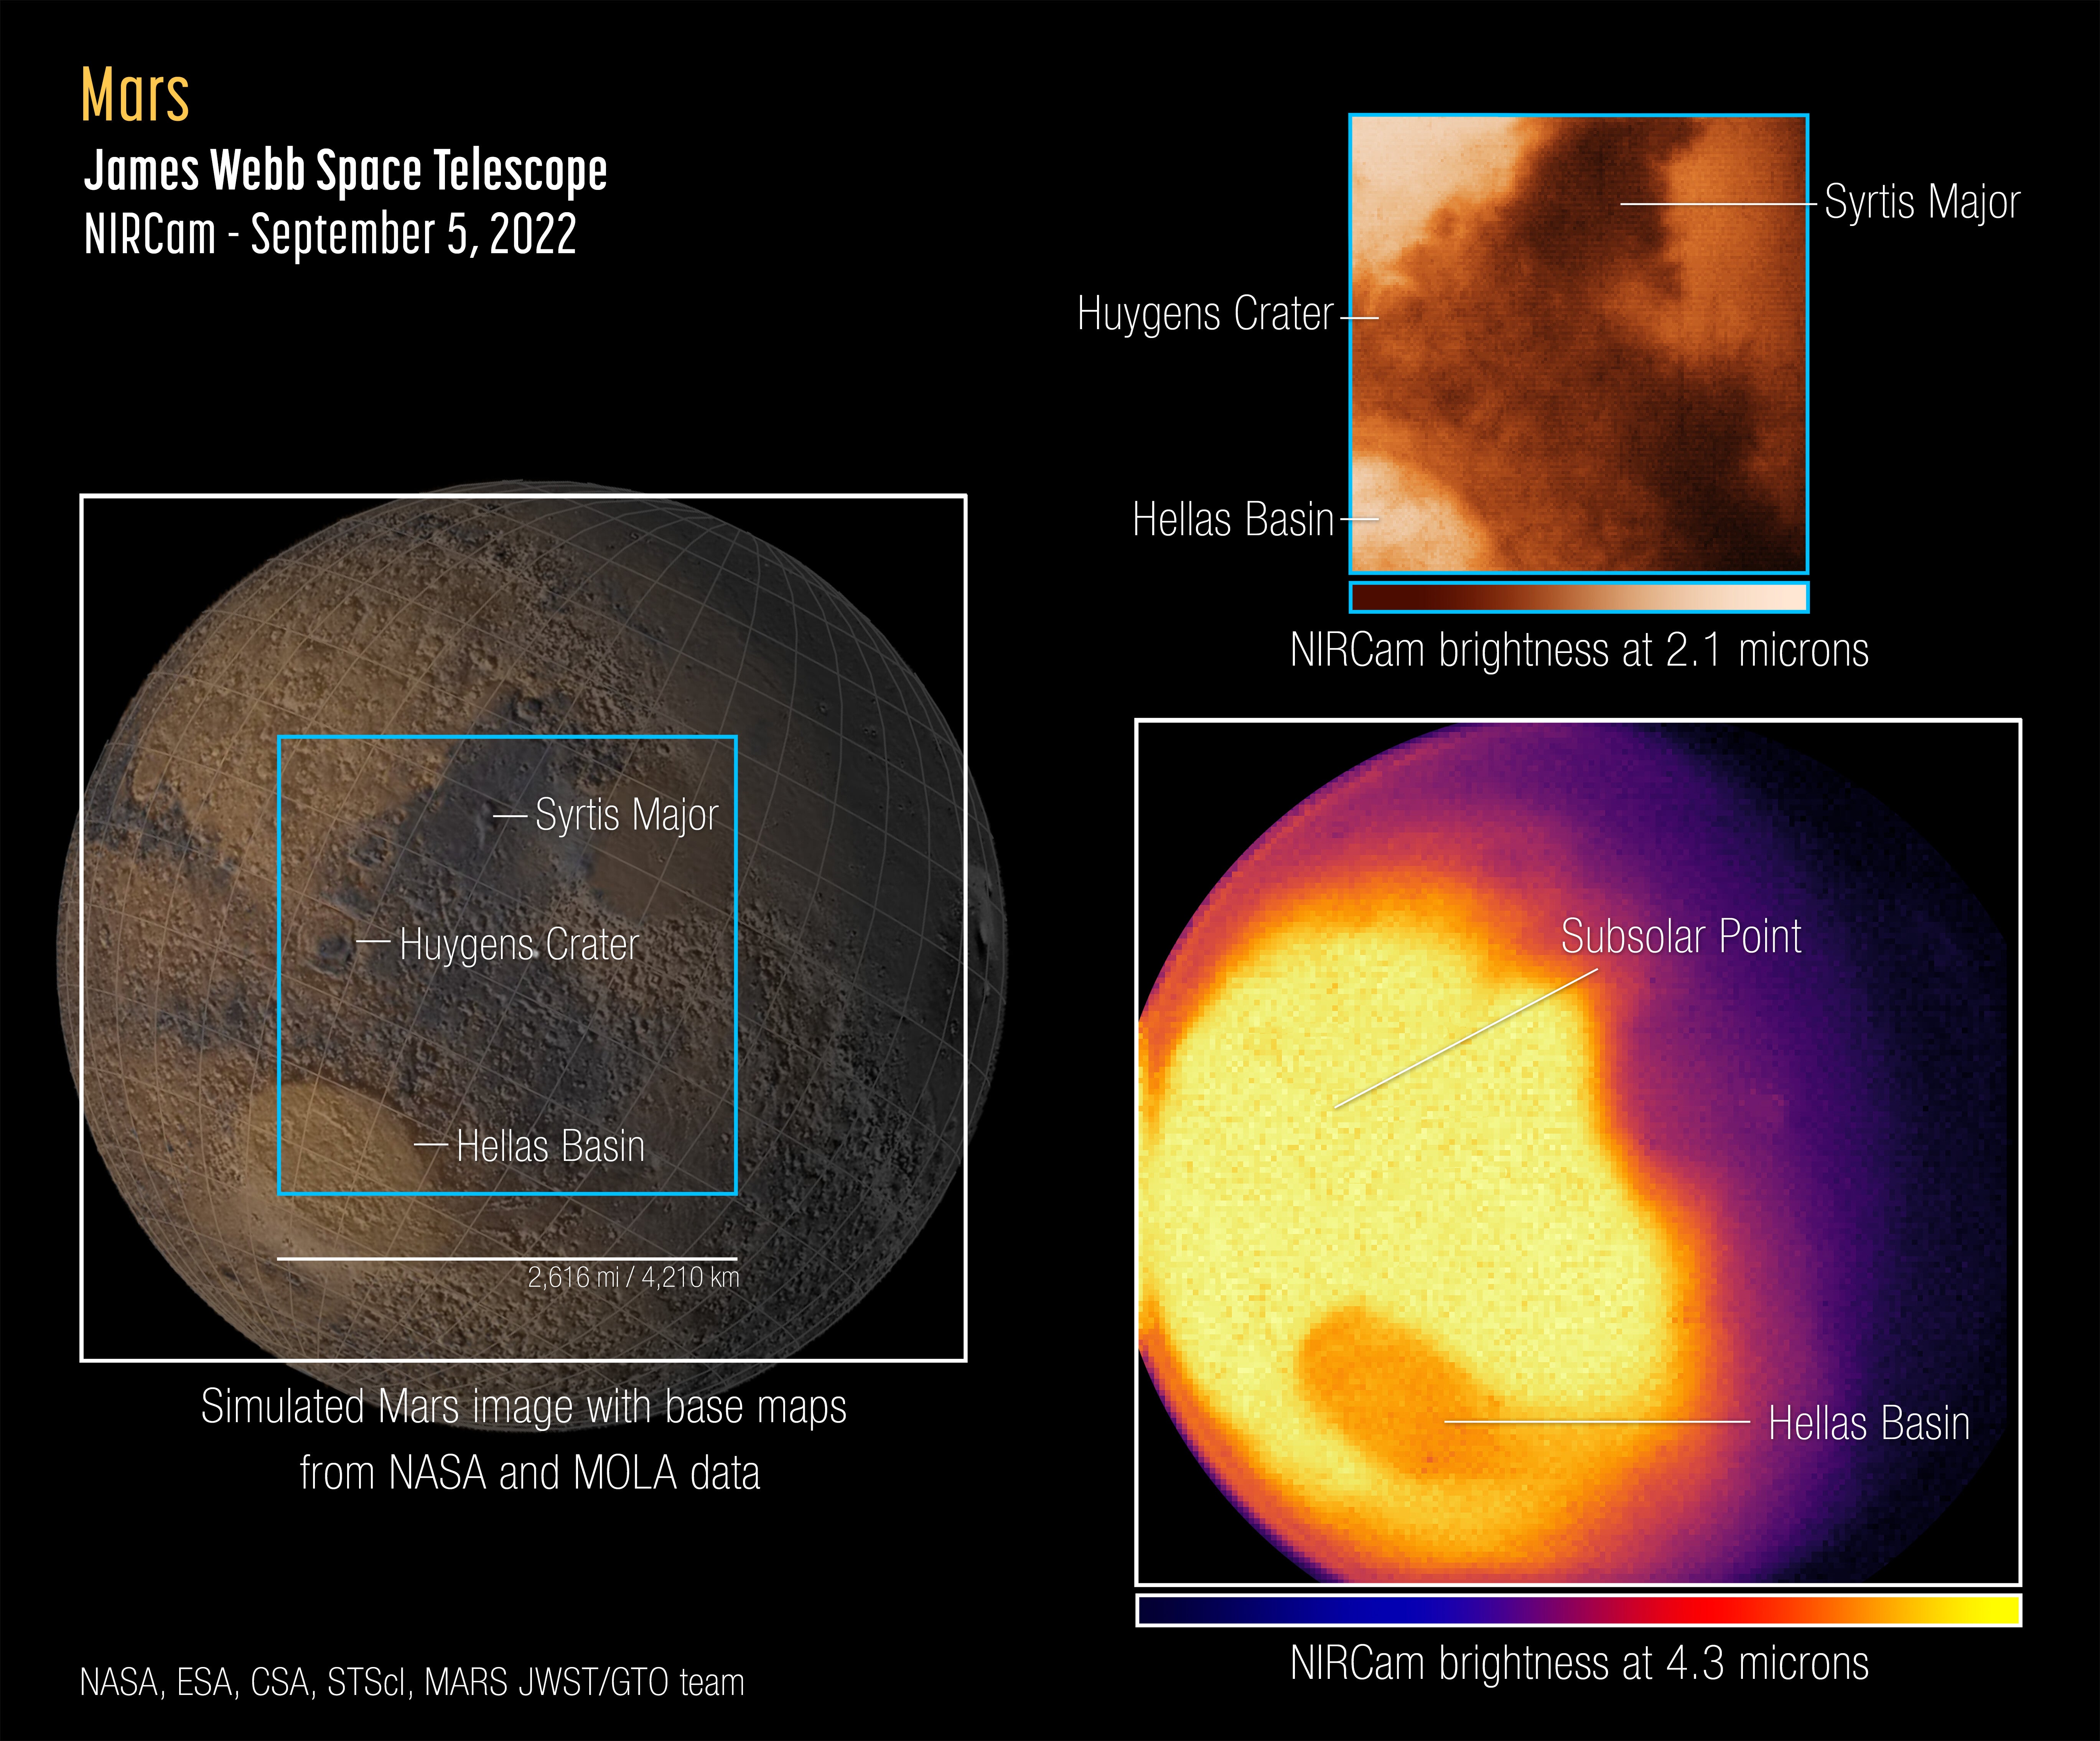 Graphic: NASA/ESA/CSA/STScI and Mars JWST/GTO team